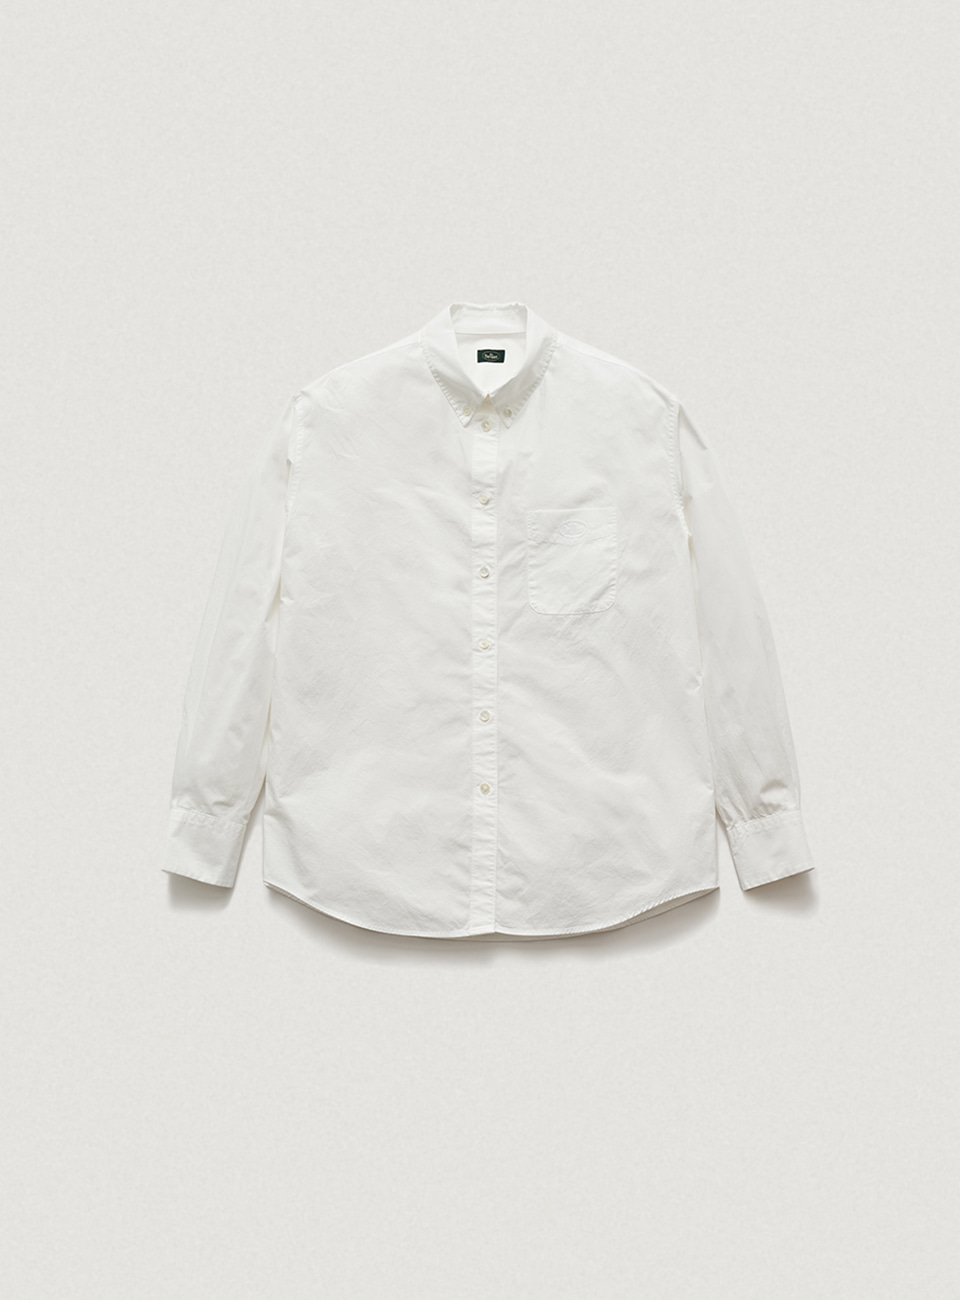 White Bukly Shirt [4월 초 순차 배송]